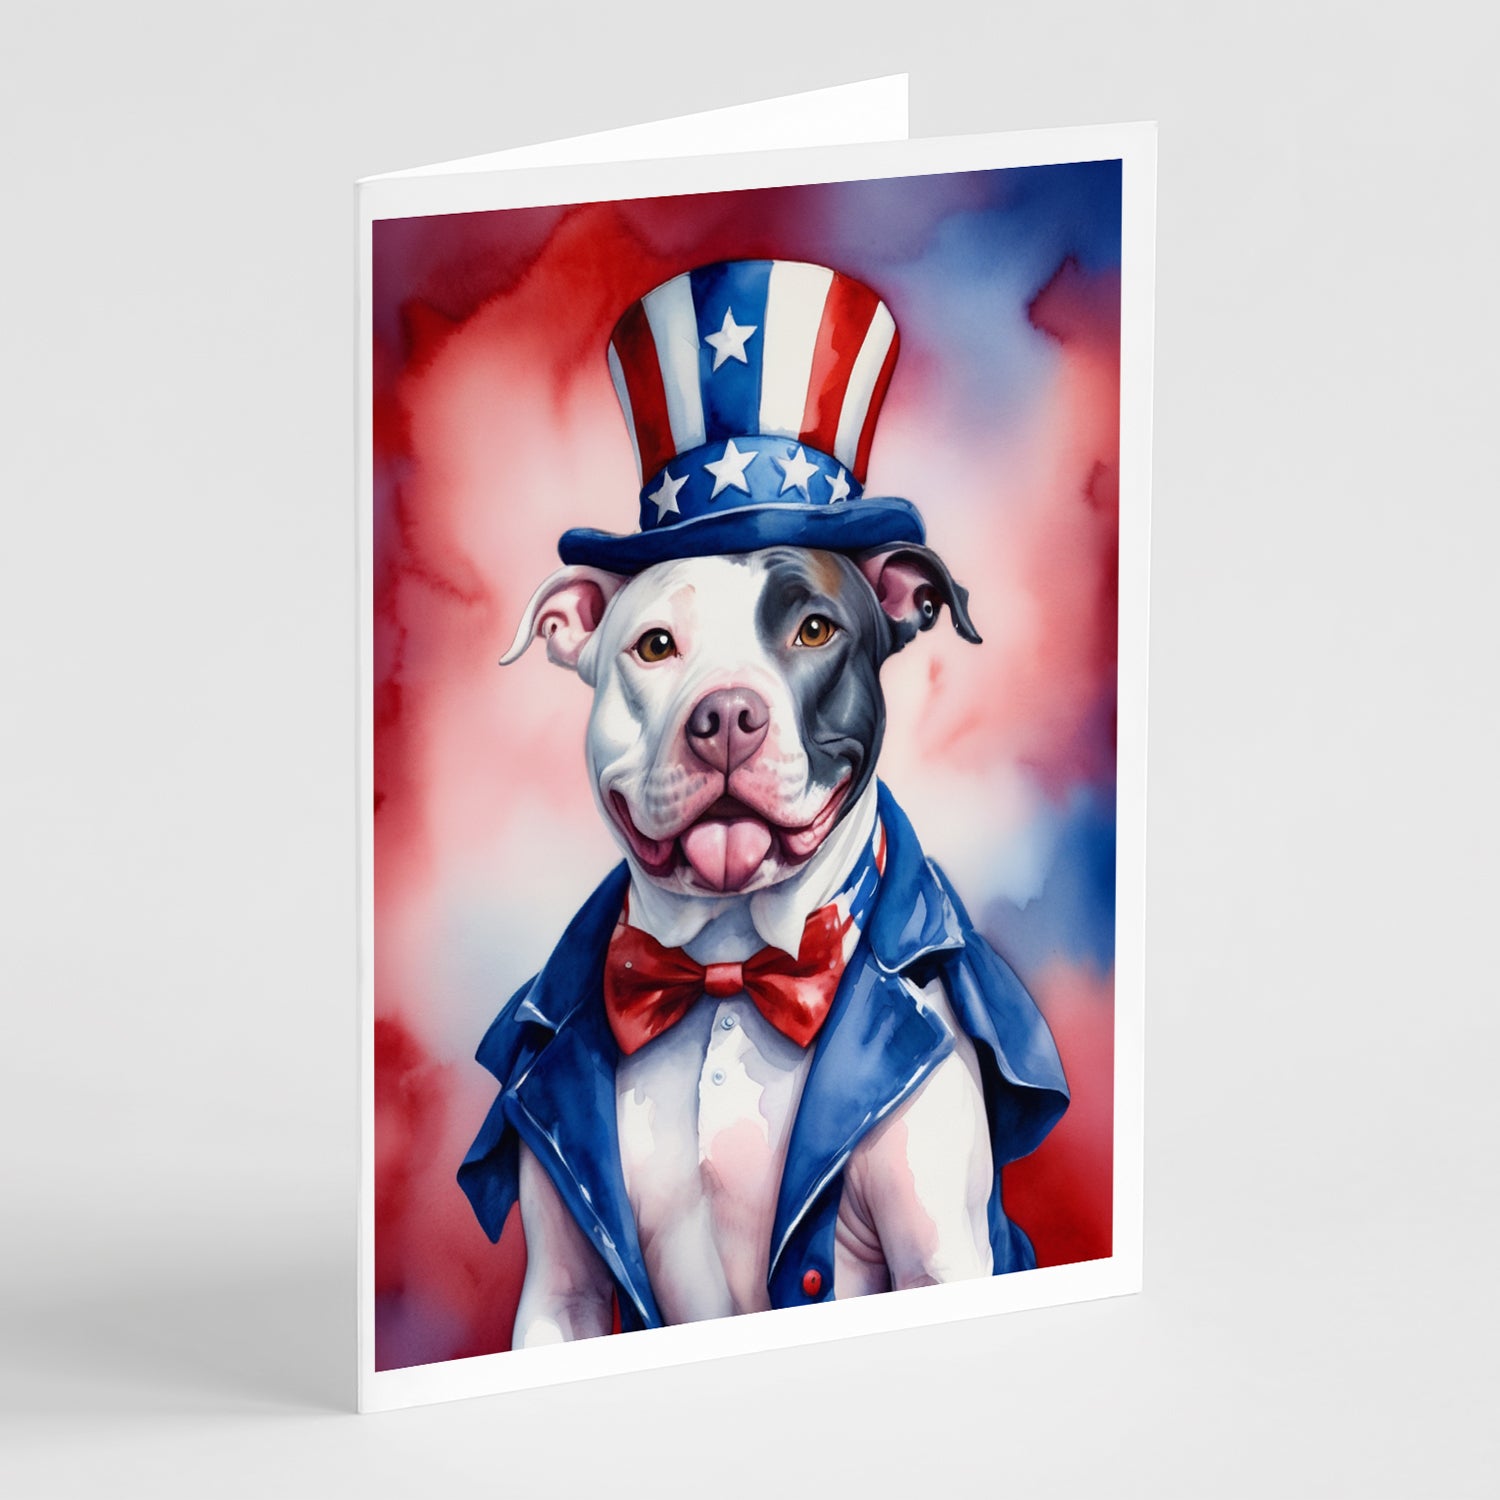 Buy this Pit Bull Terrier Patriotic American Greeting Cards Pack of 8